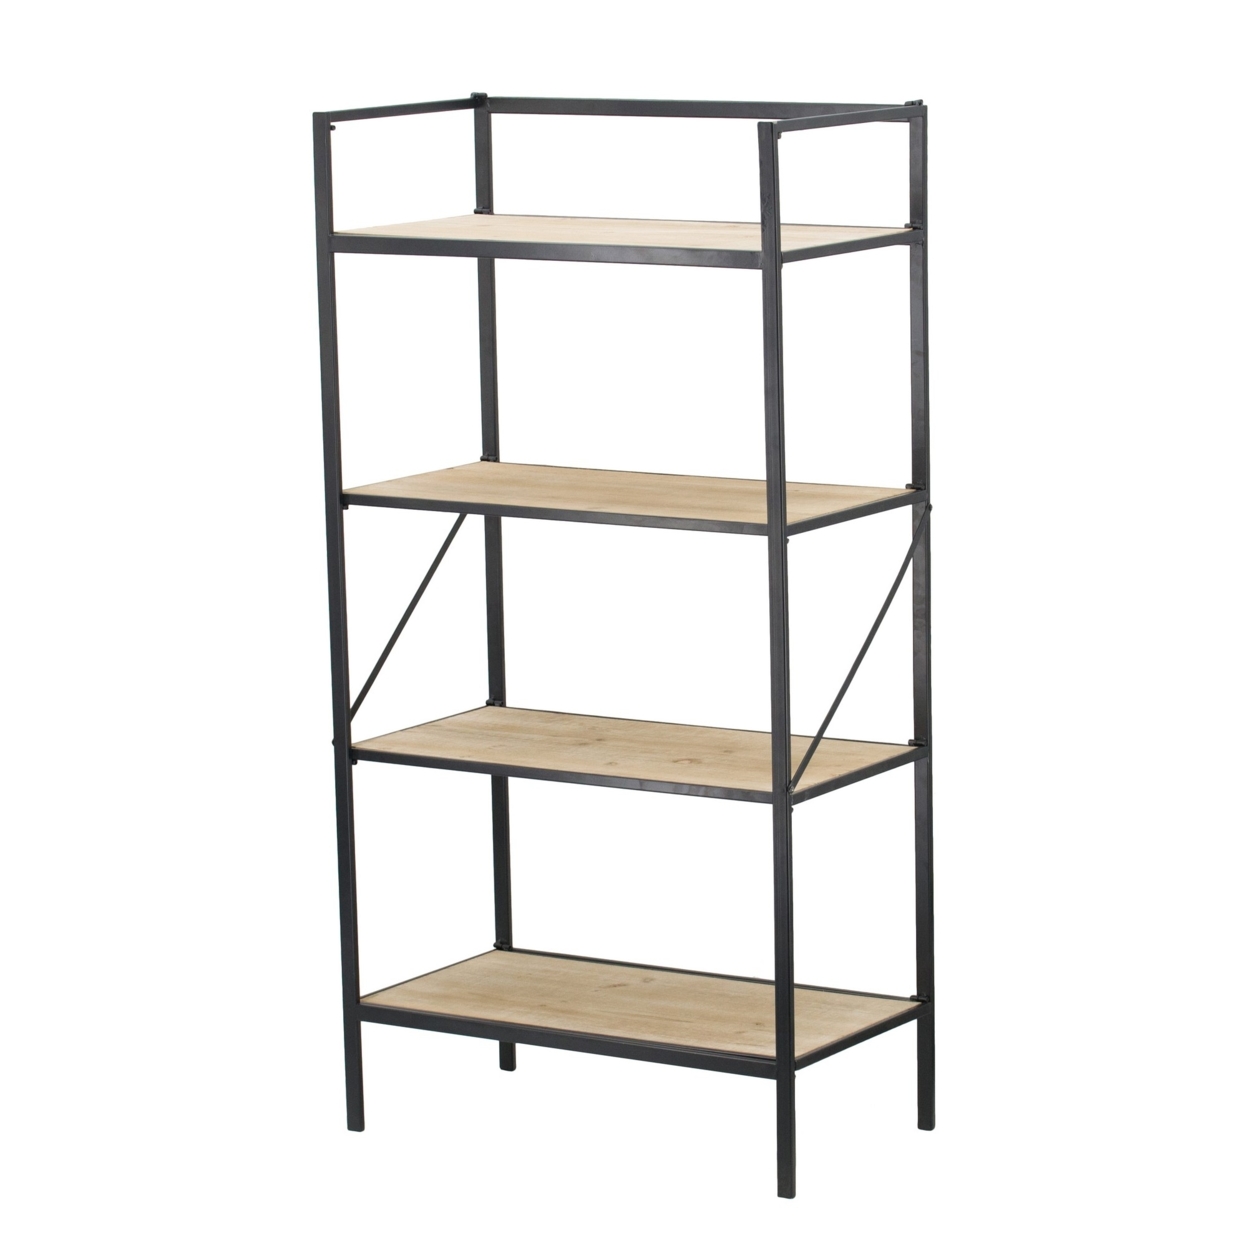 47 Inch Standing Bookshelf, Modern, 4 Tier, Fir Wood, Iron, Black, Brown, Saltoro Sherpi